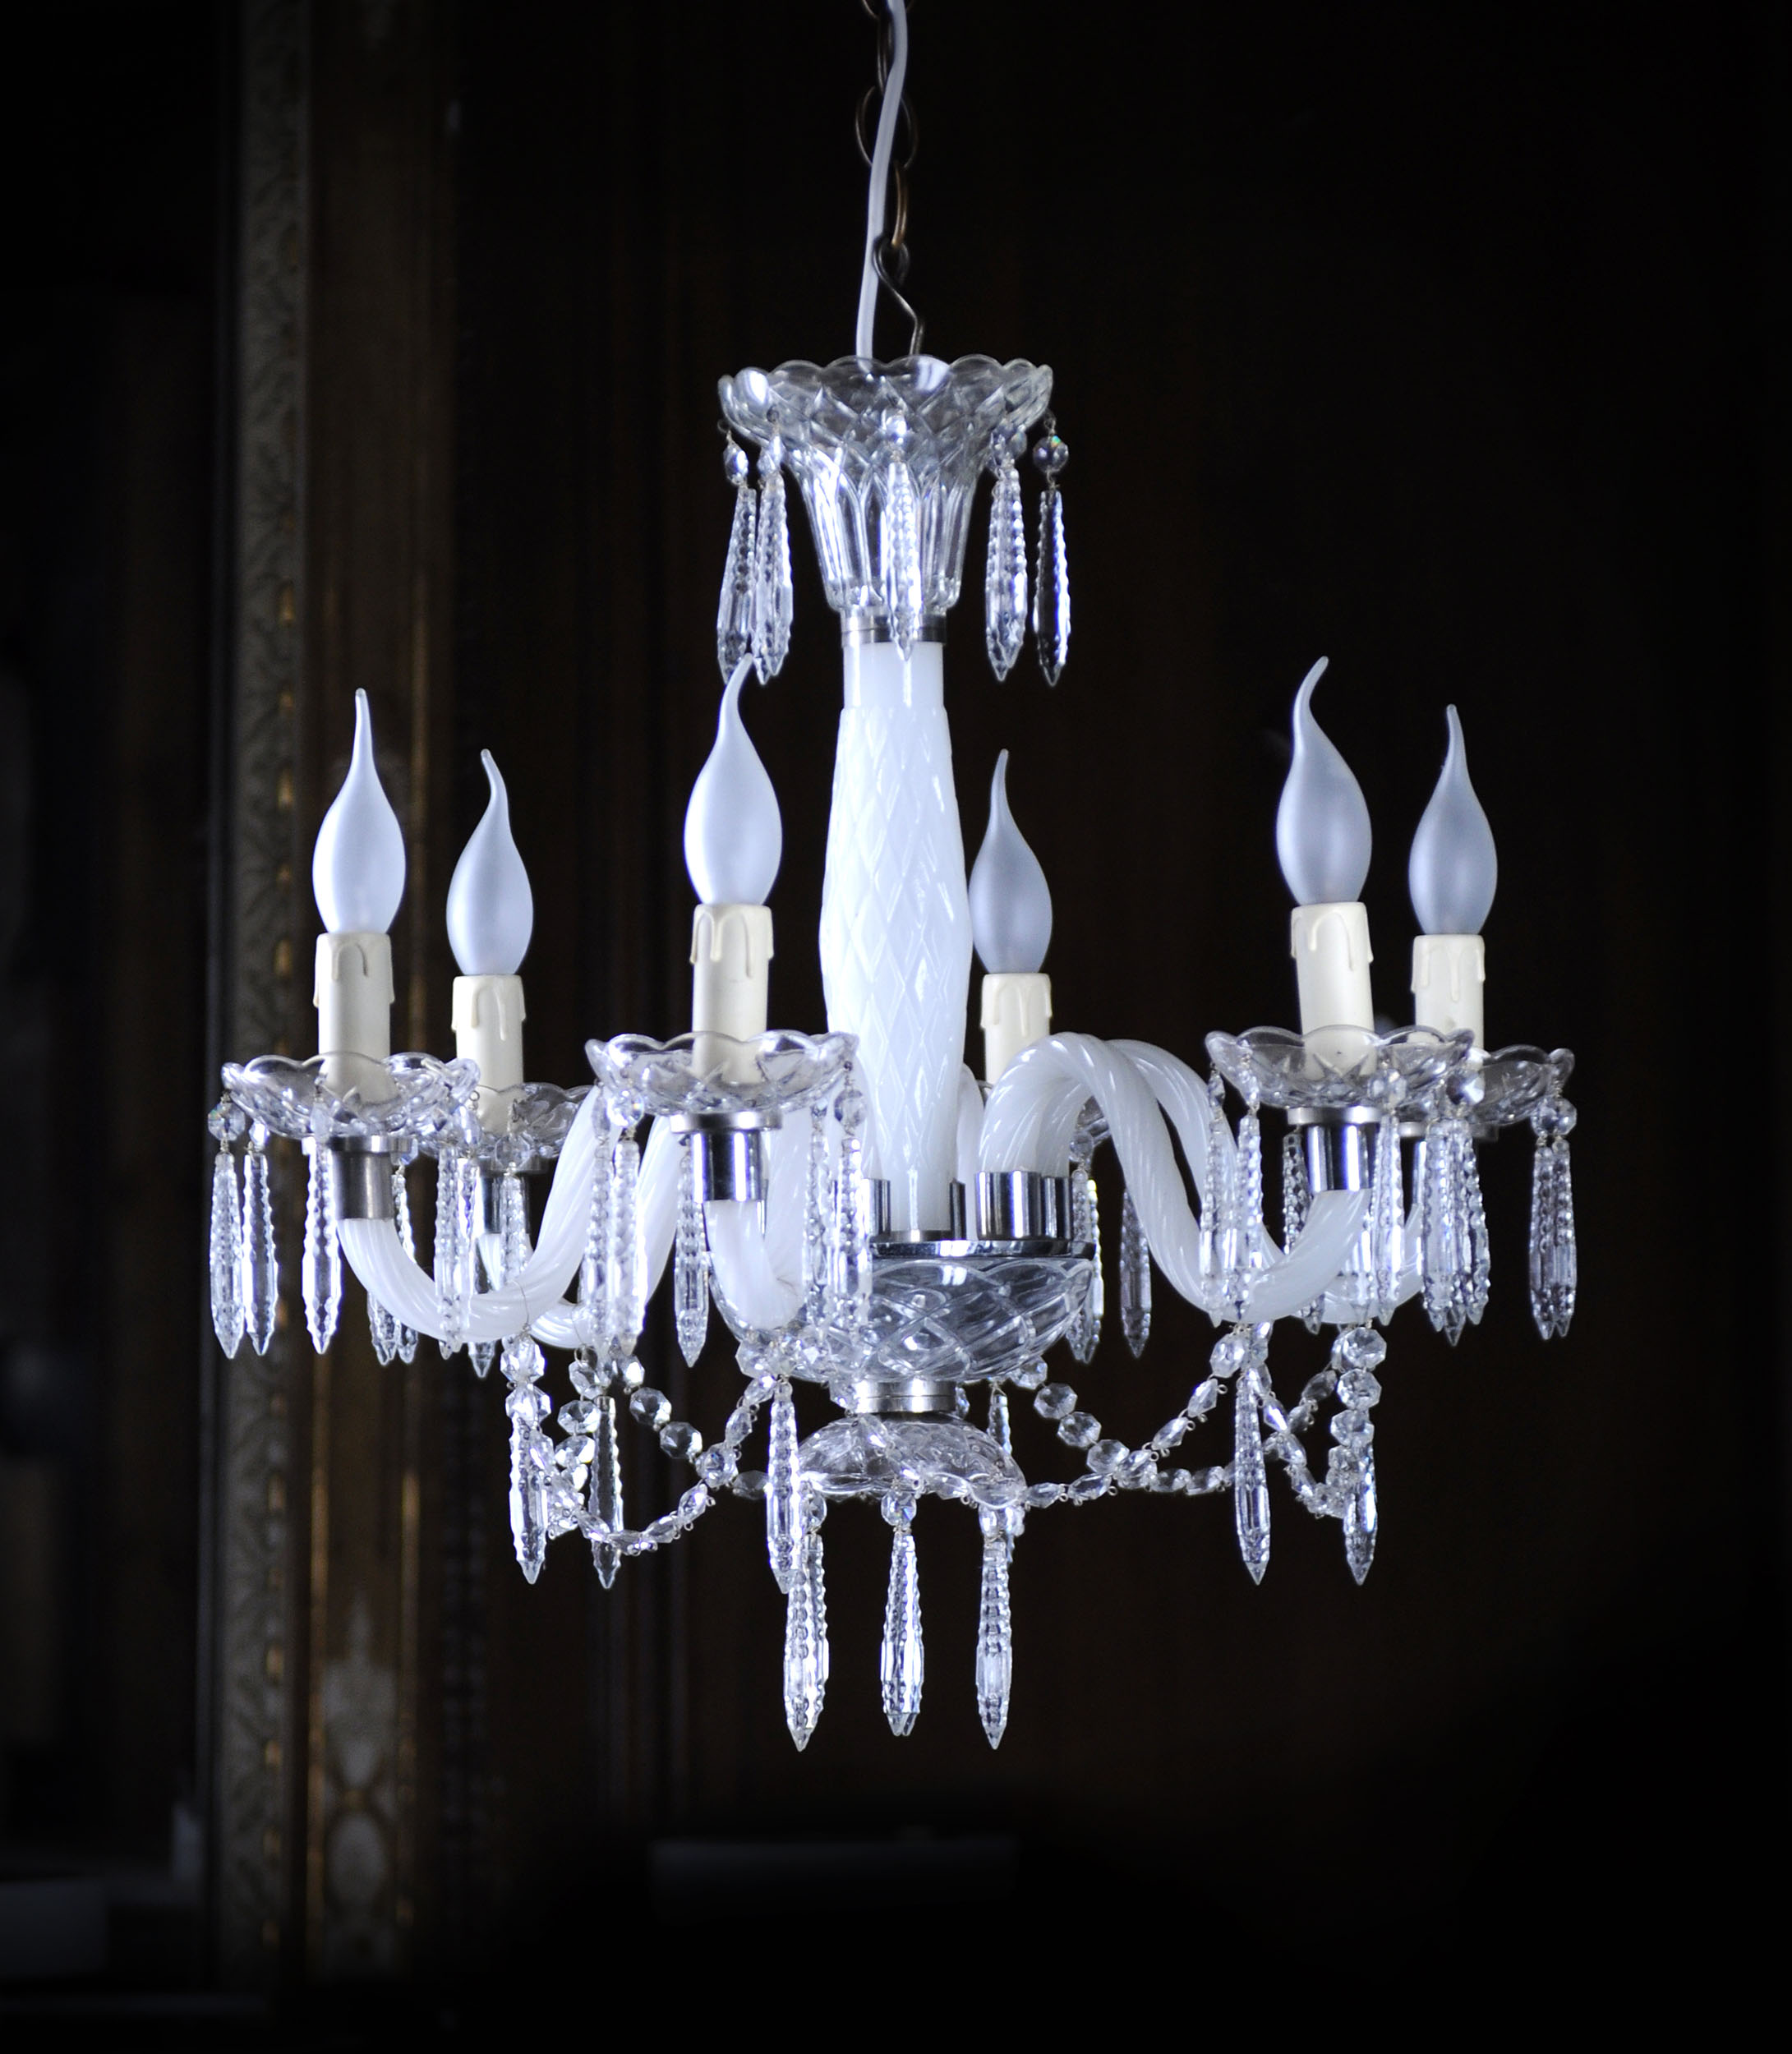 A small 20th century Murano glass chandelier